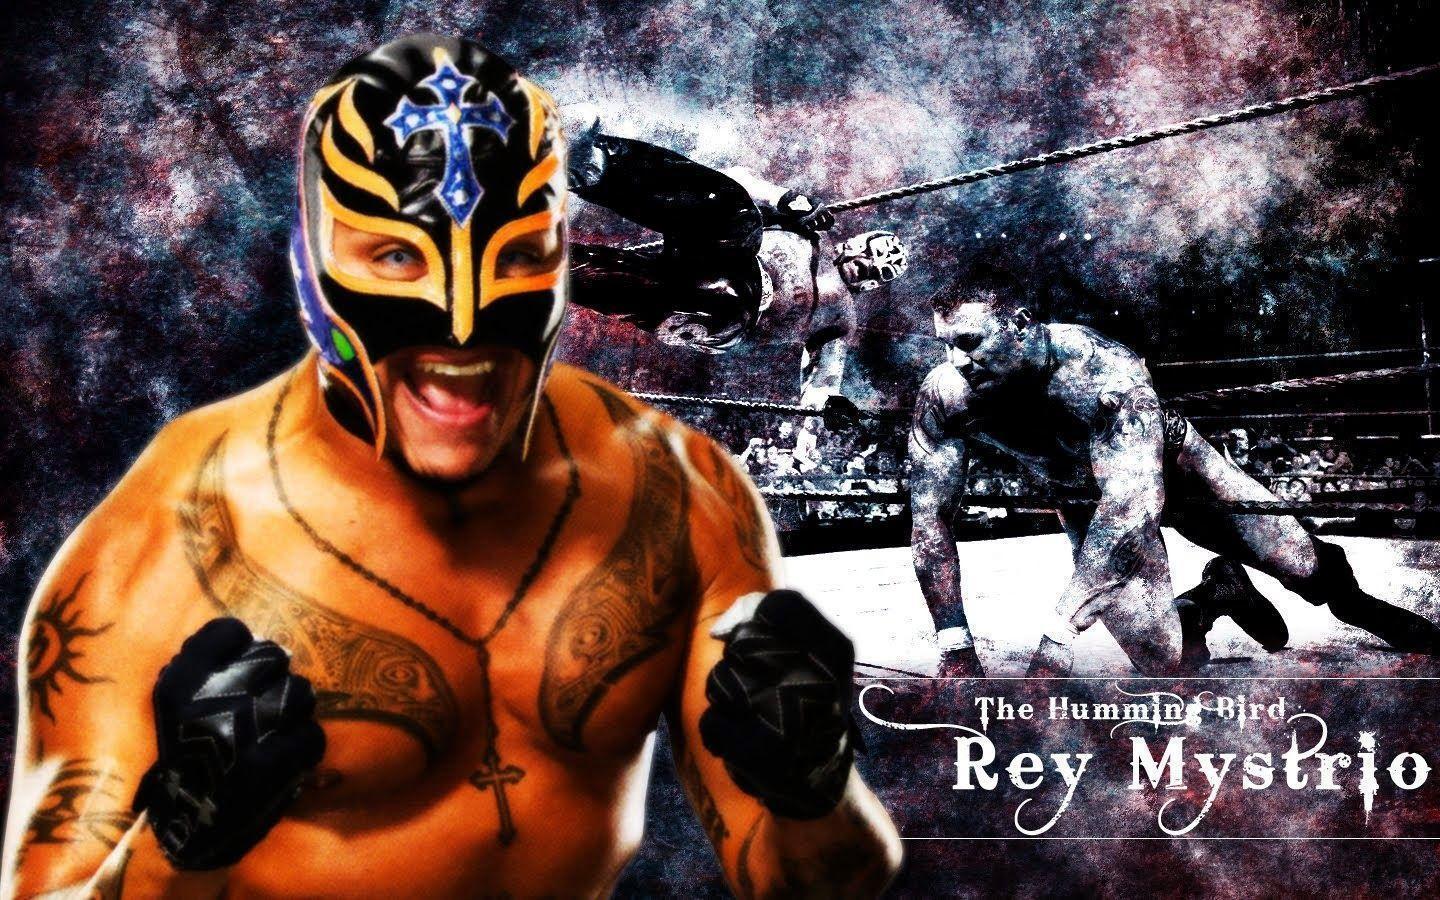 Rey Mysterio HD Wallpaper Wrestler. Download Free High